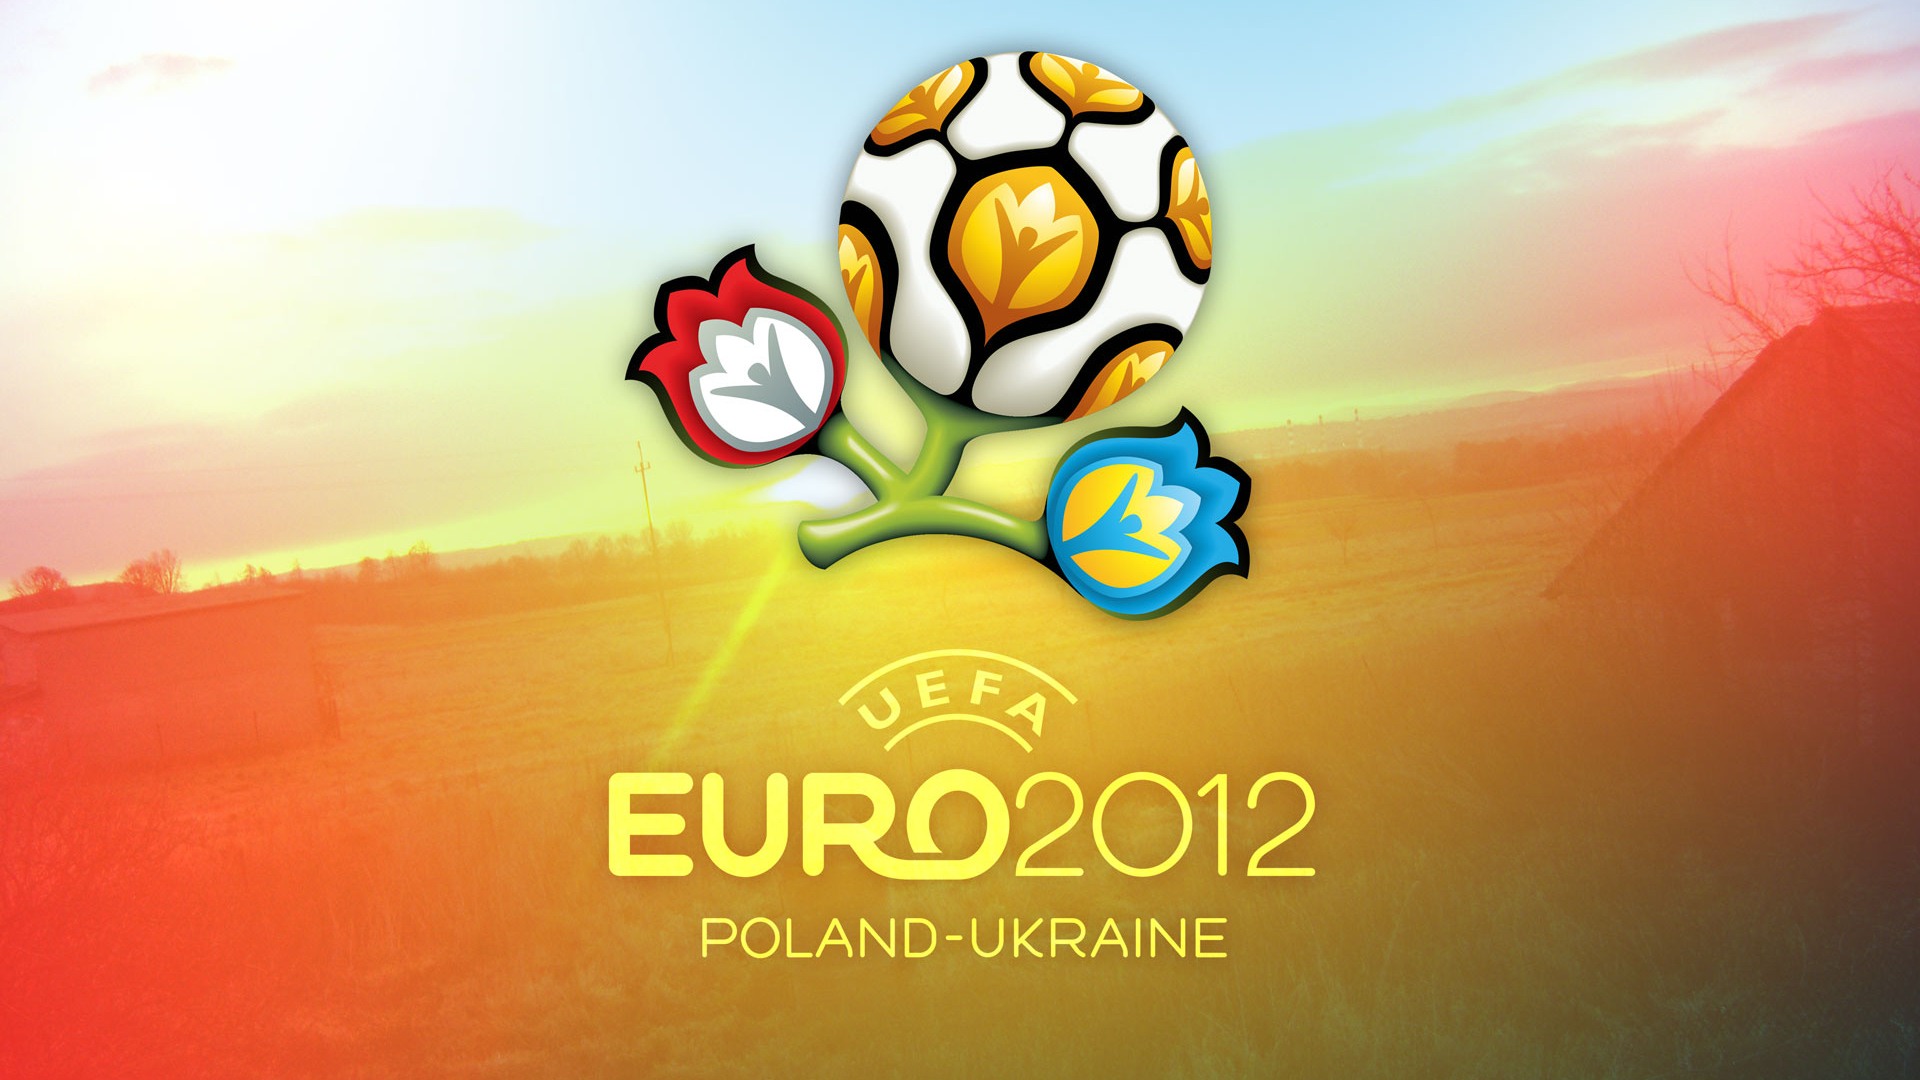 UEFA EURO 2012 欧洲足球锦标赛 高清壁纸(一)1 - 1920x1080